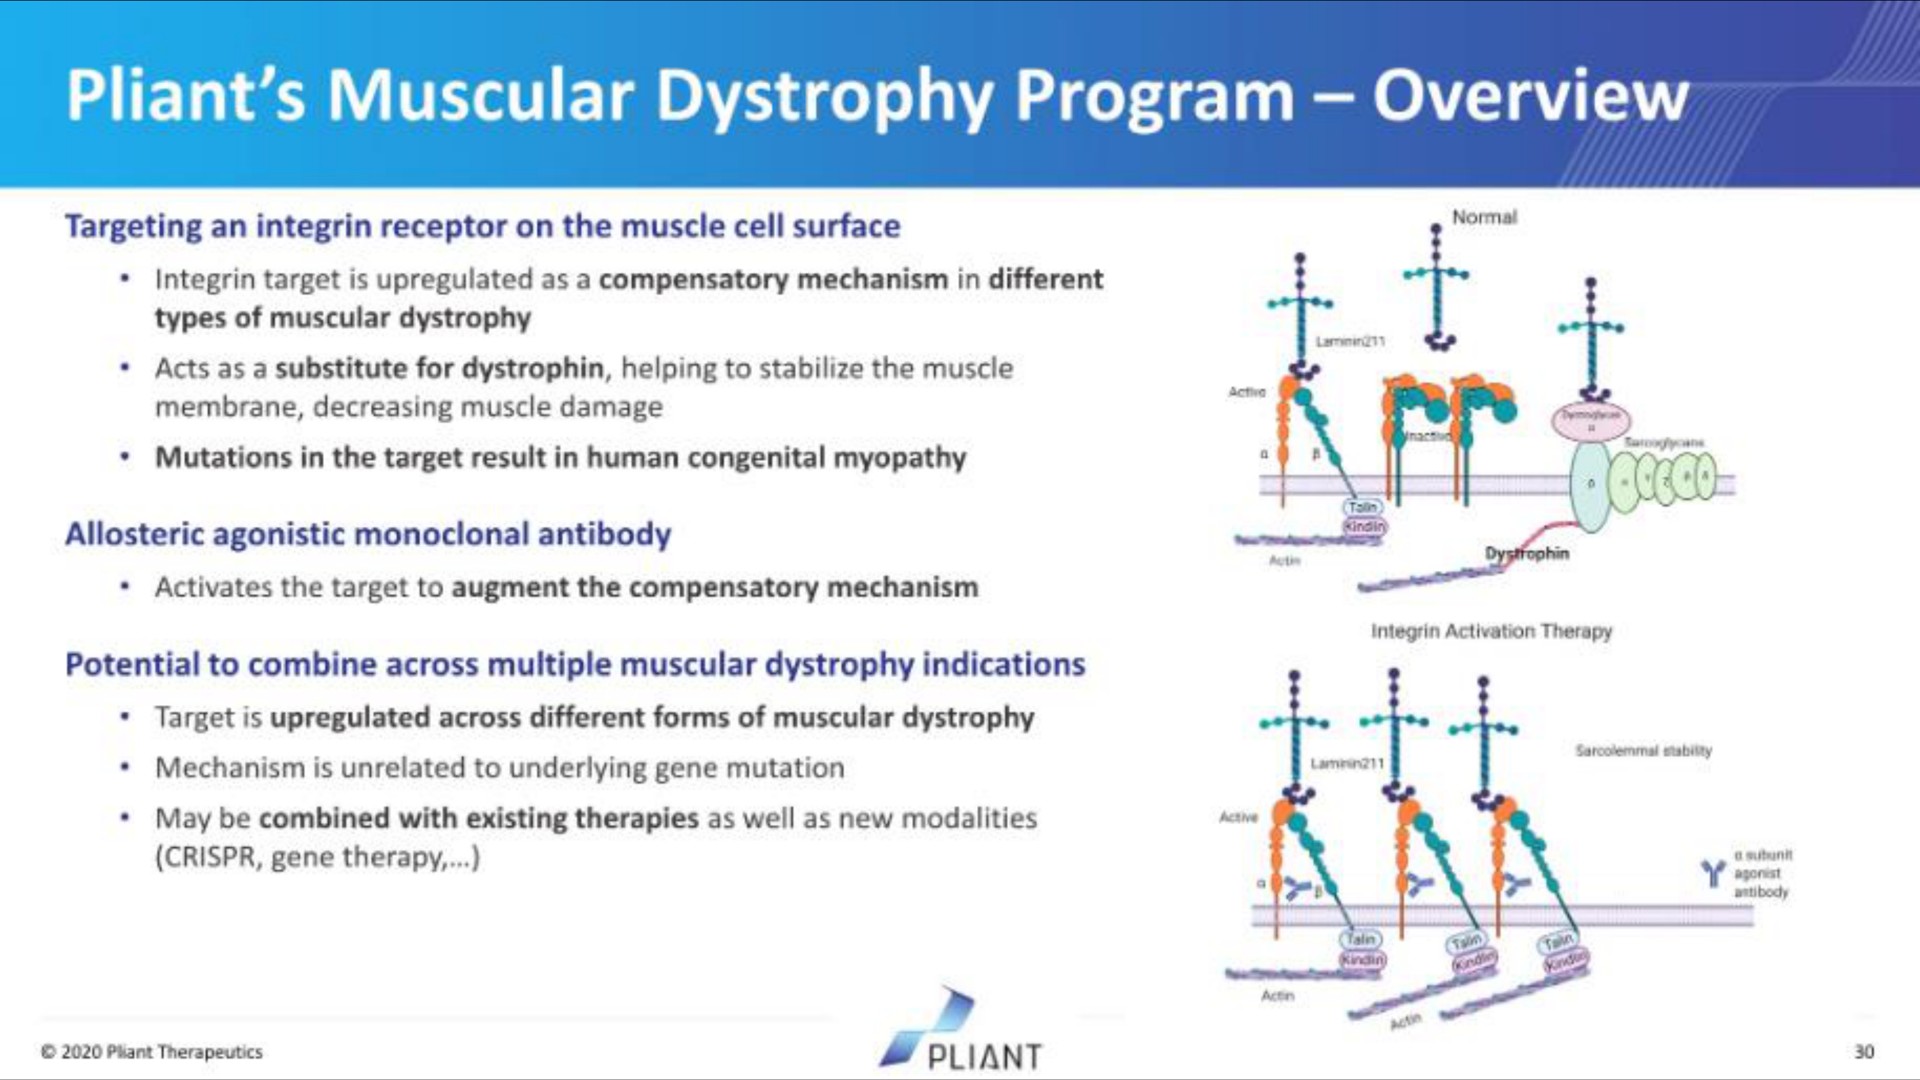 pliant muscular dystrophy program overview | Pilant Therapeutics